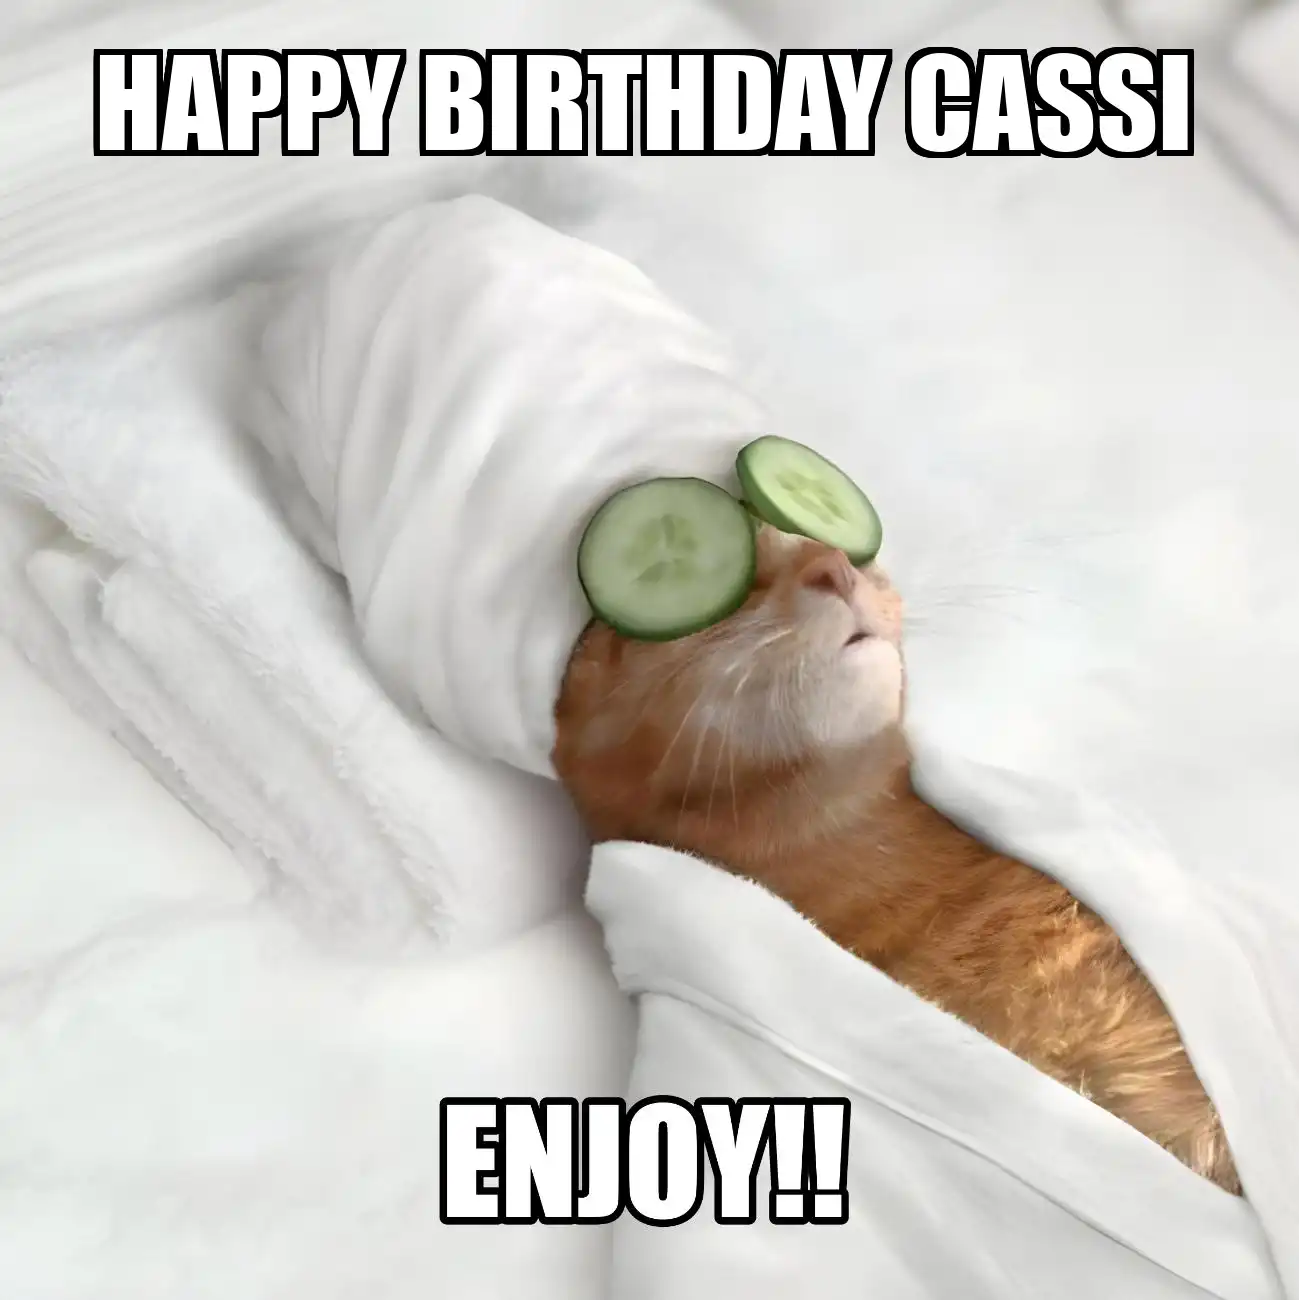 Happy Birthday Cassi Enjoy Cat Meme